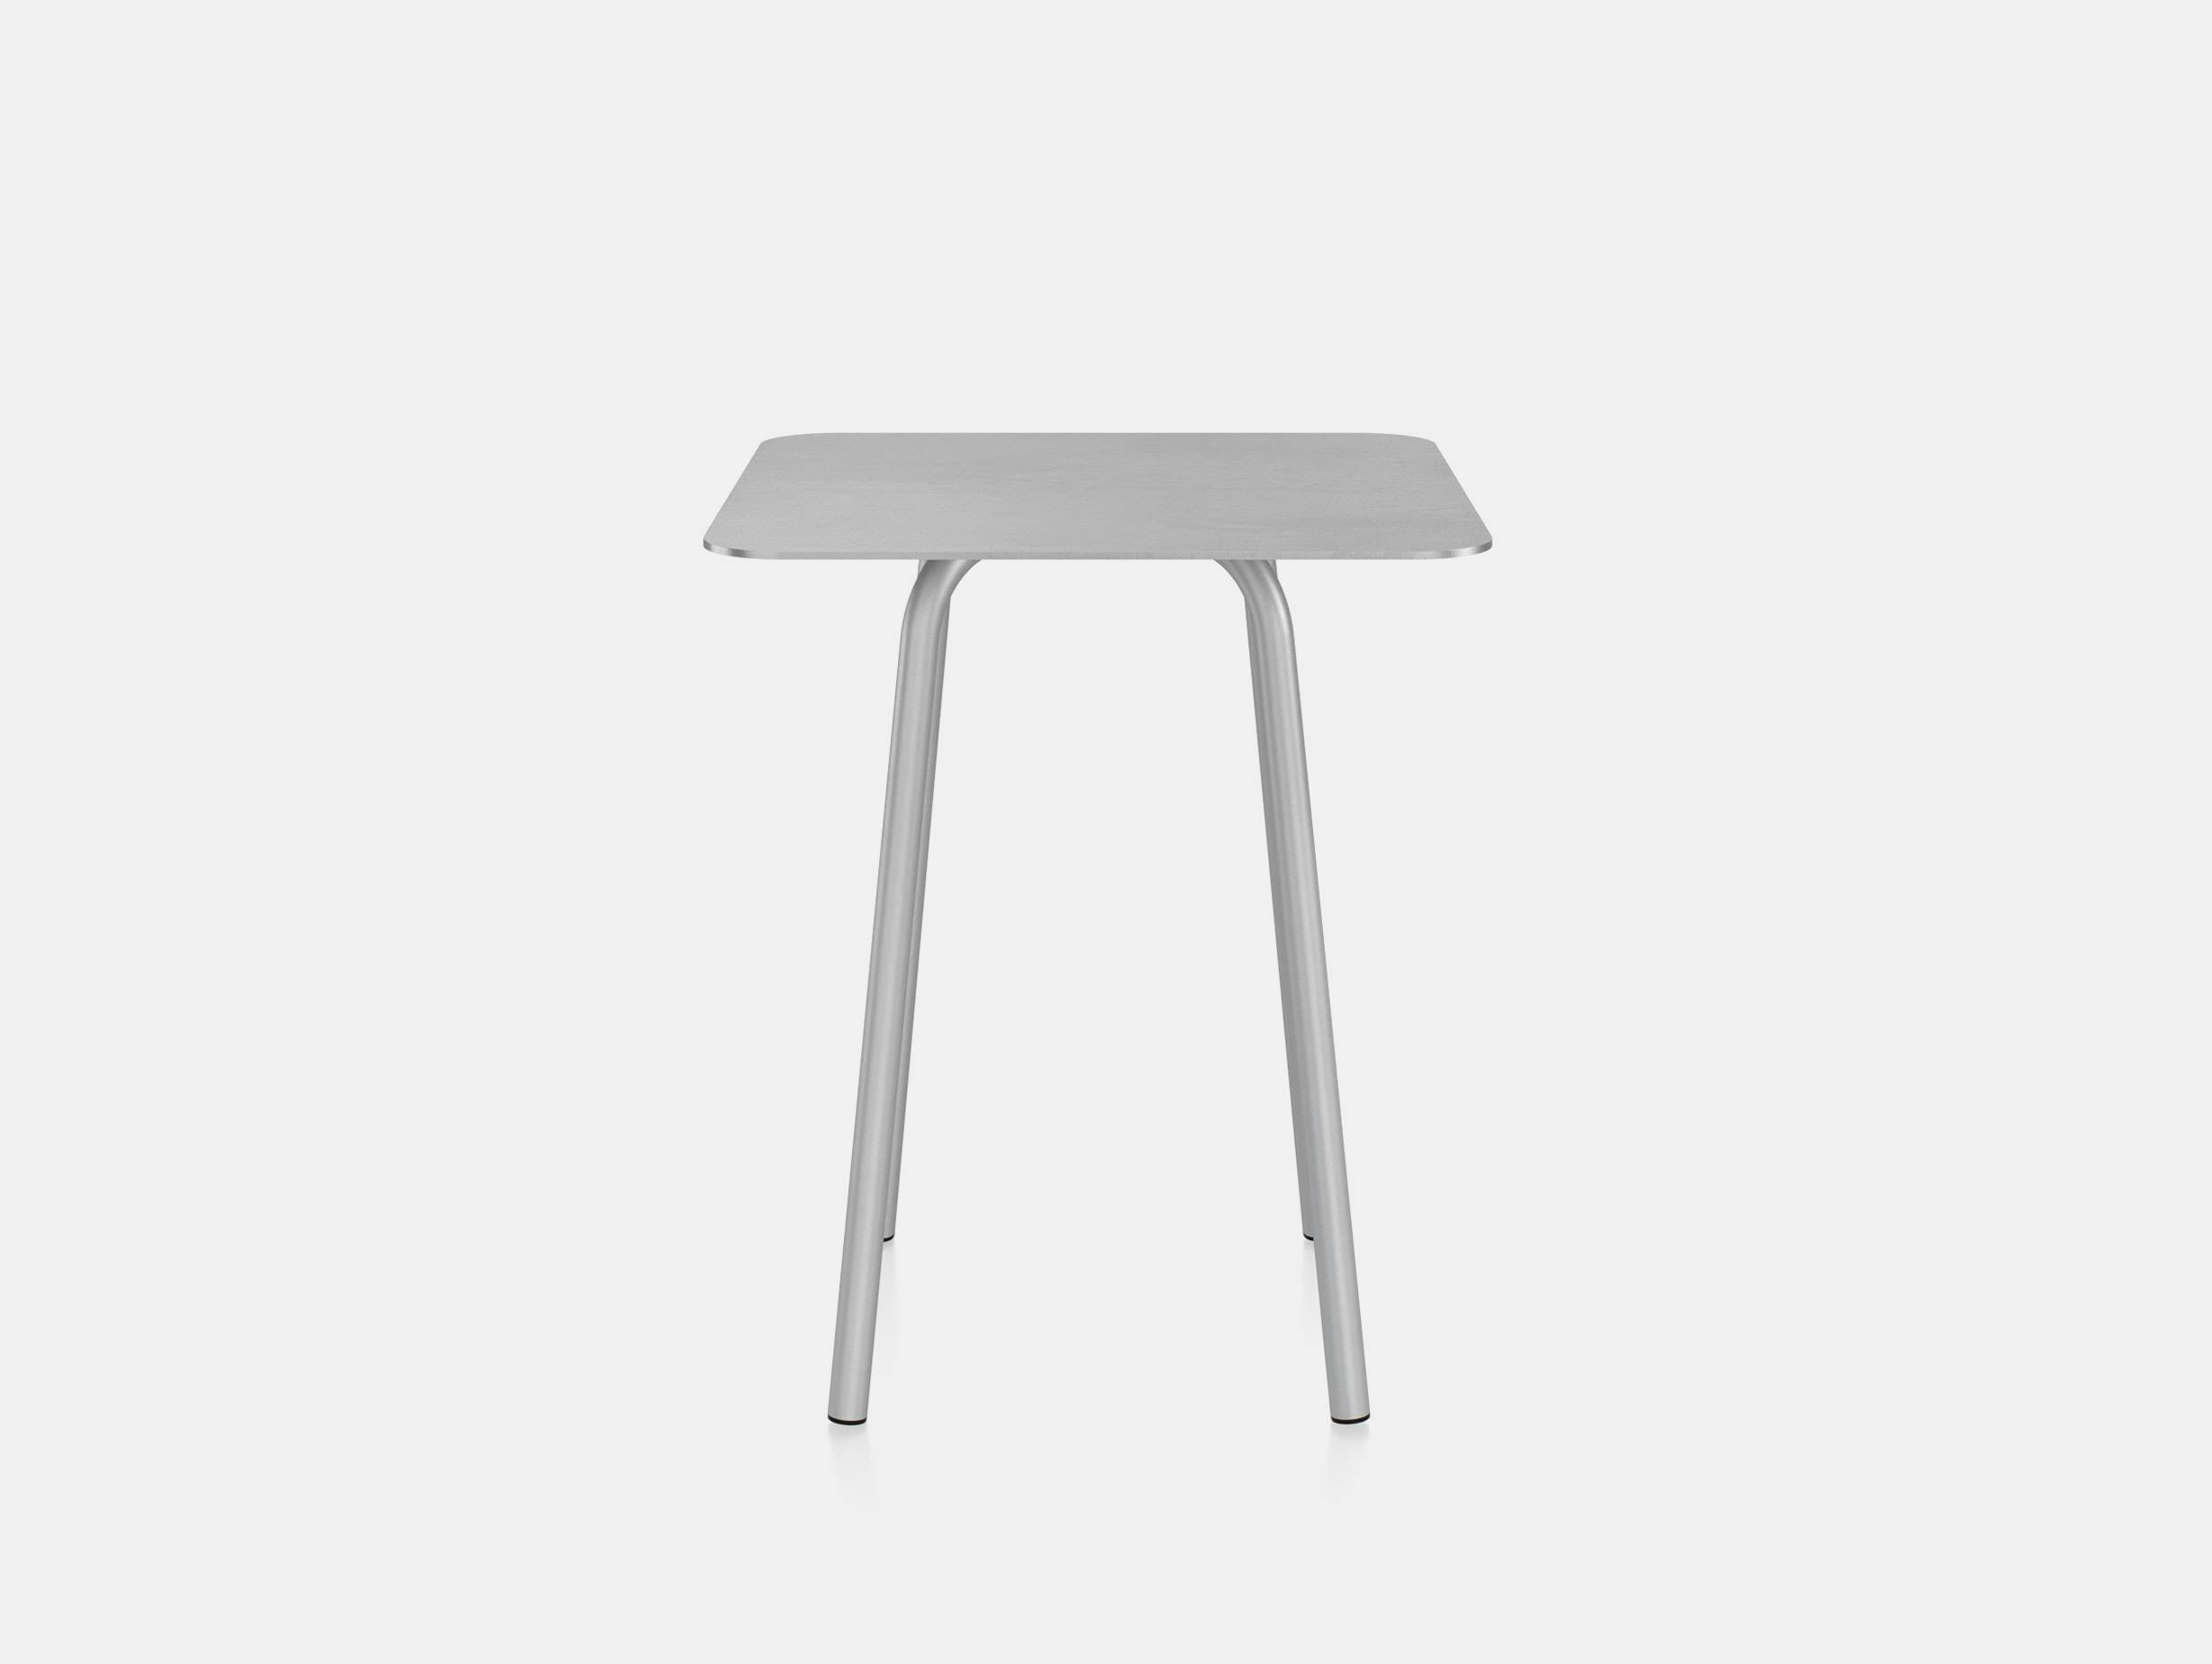 Emeco konstantin grcic parrish cafe table square 60cm aluminium base aluminium top